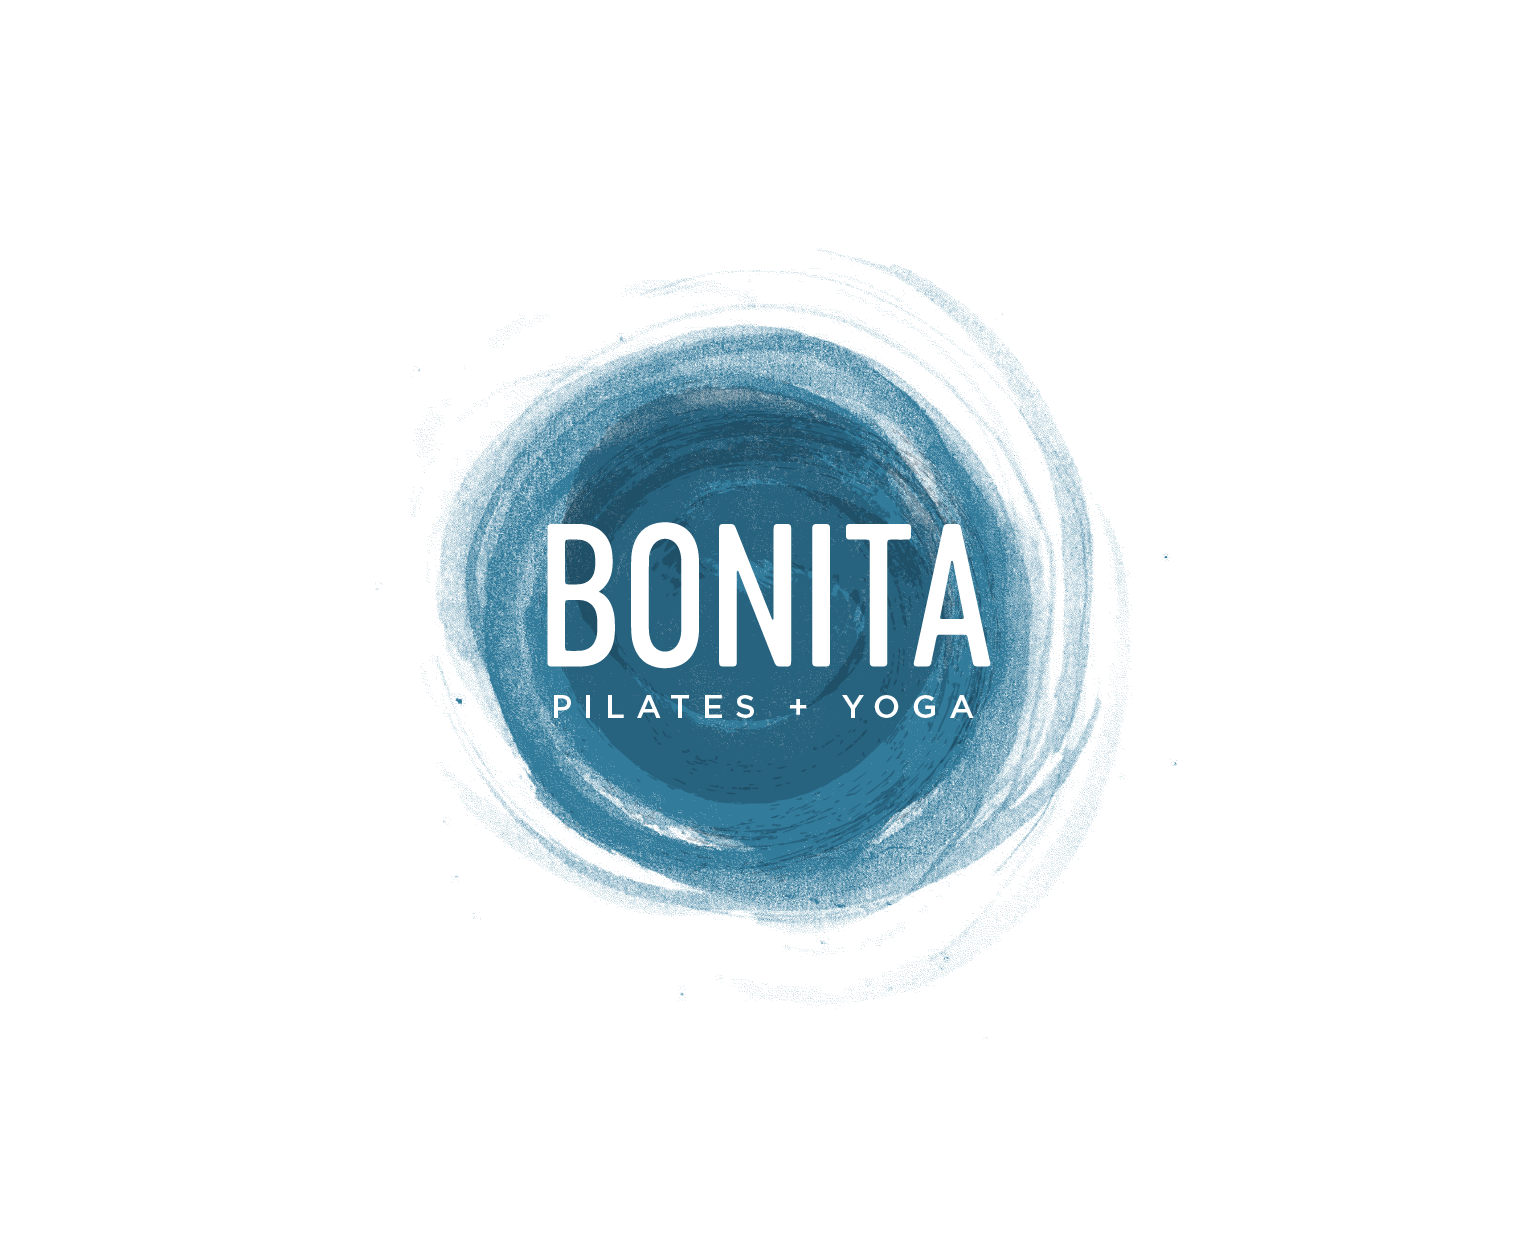 Bonita Pilates and Yoga - Brand Development, Graphic Design and Logo